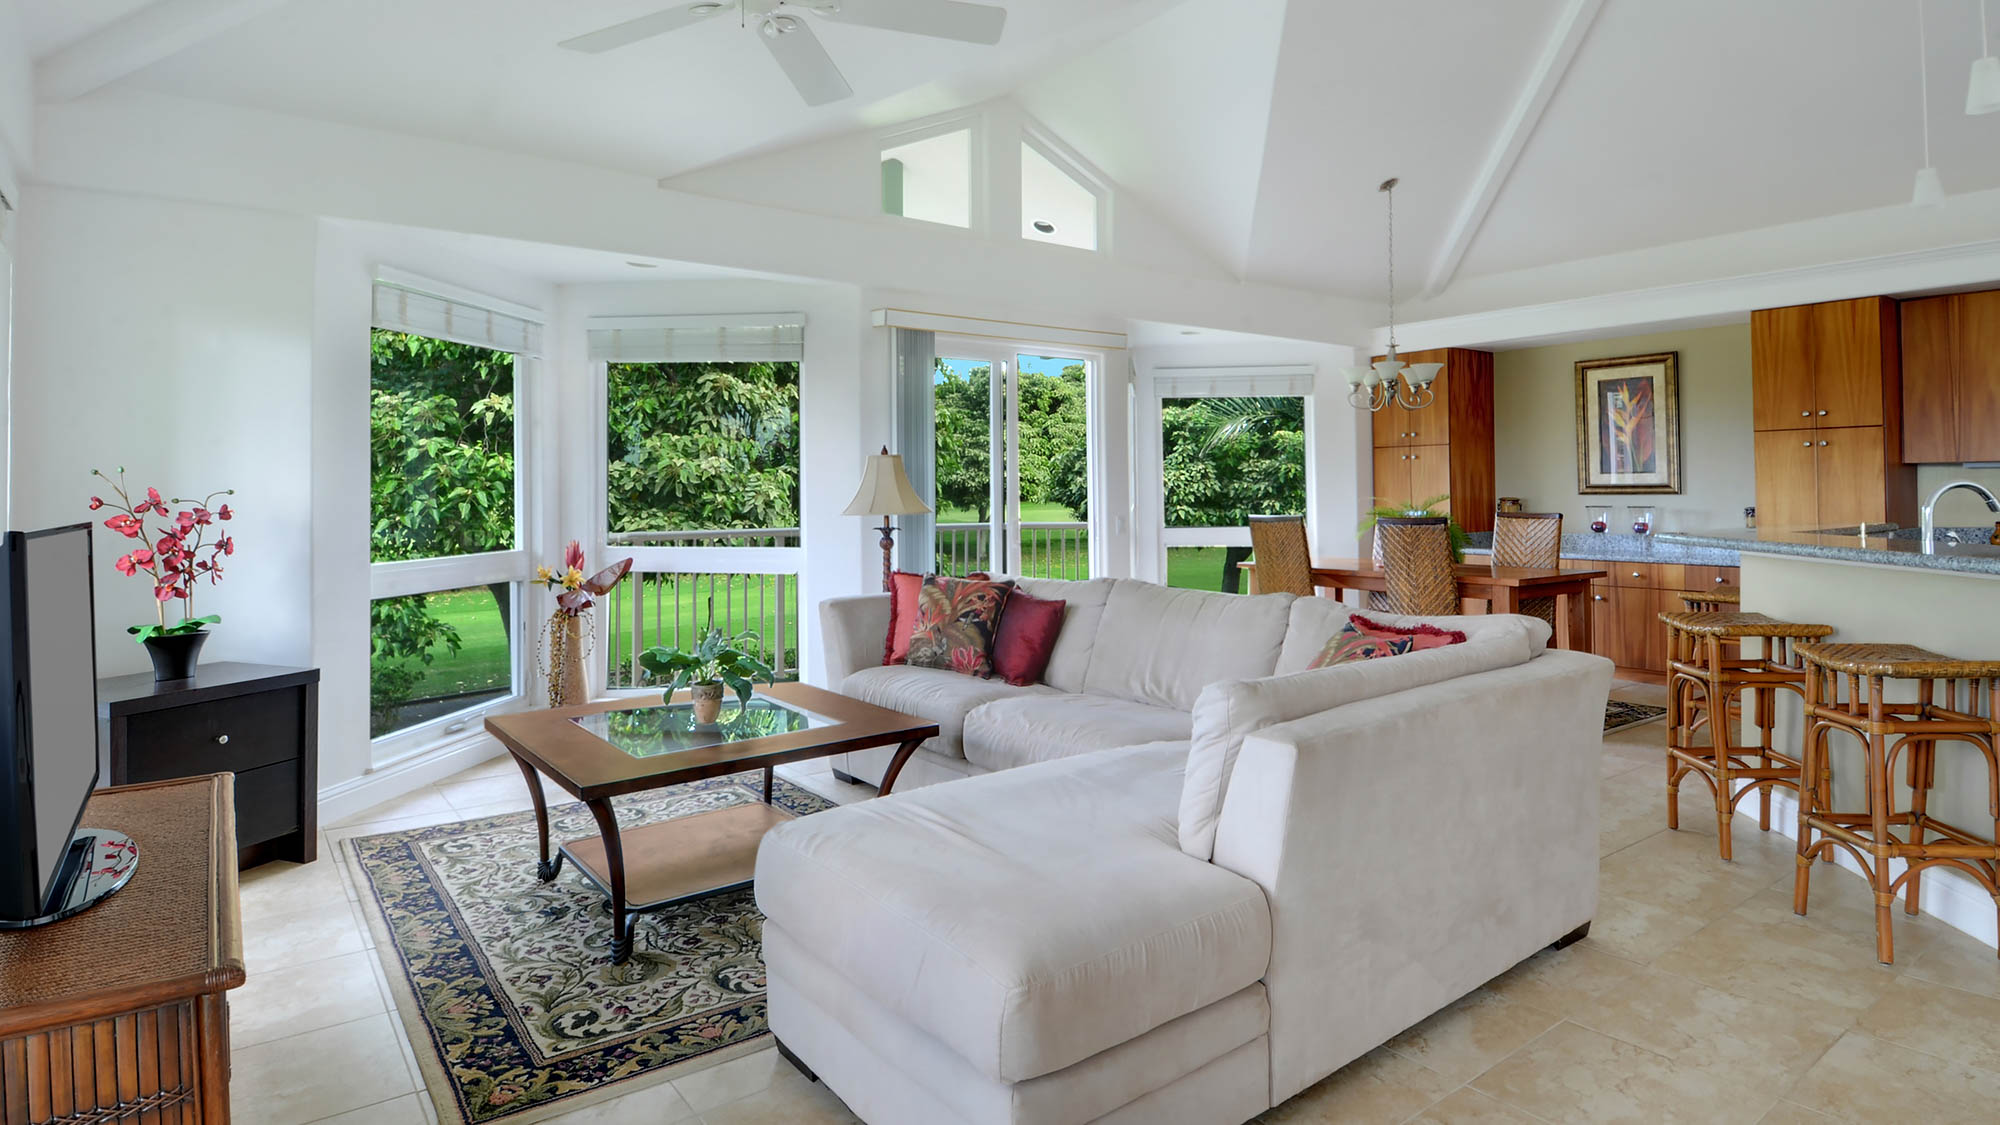 Villas of Kamalii #01 - Living Room & Lanai View - Parrish Kauai